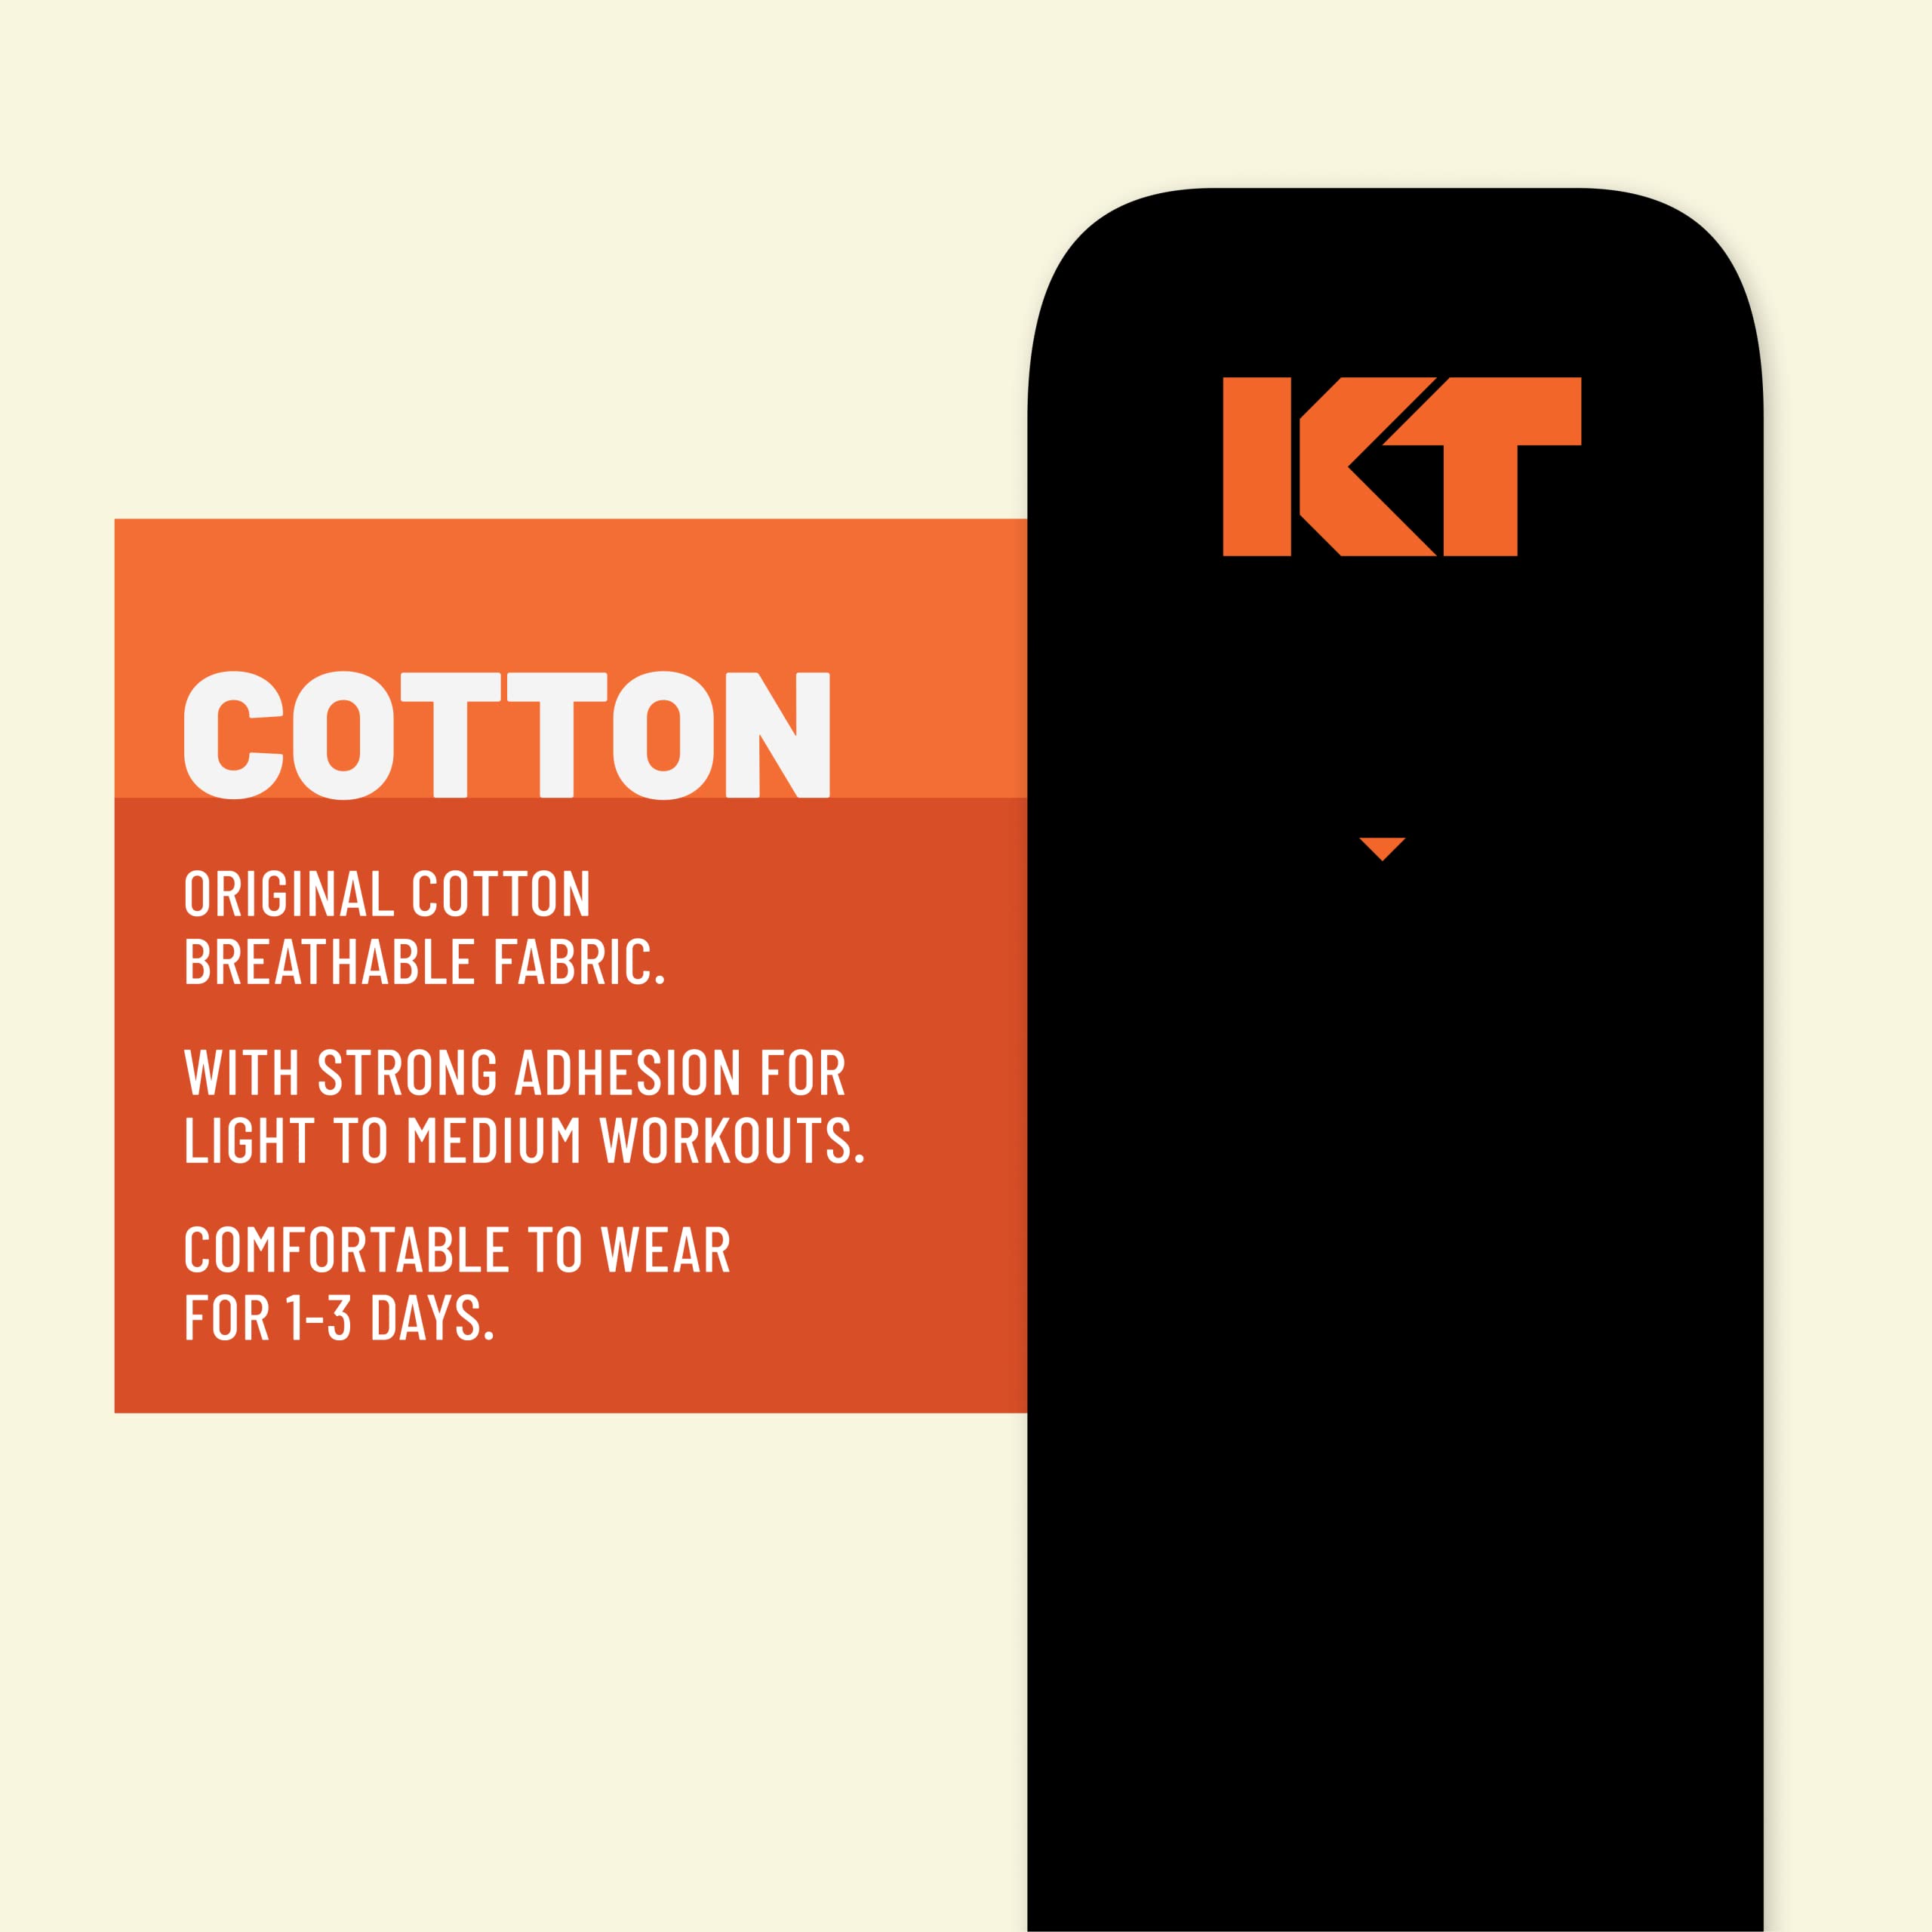 KT Tape, Original Cotton, Elastic Kinesiology Athletic Tape, 20 Count, 10” Precut Strips, Purple, 20 Precut Strips